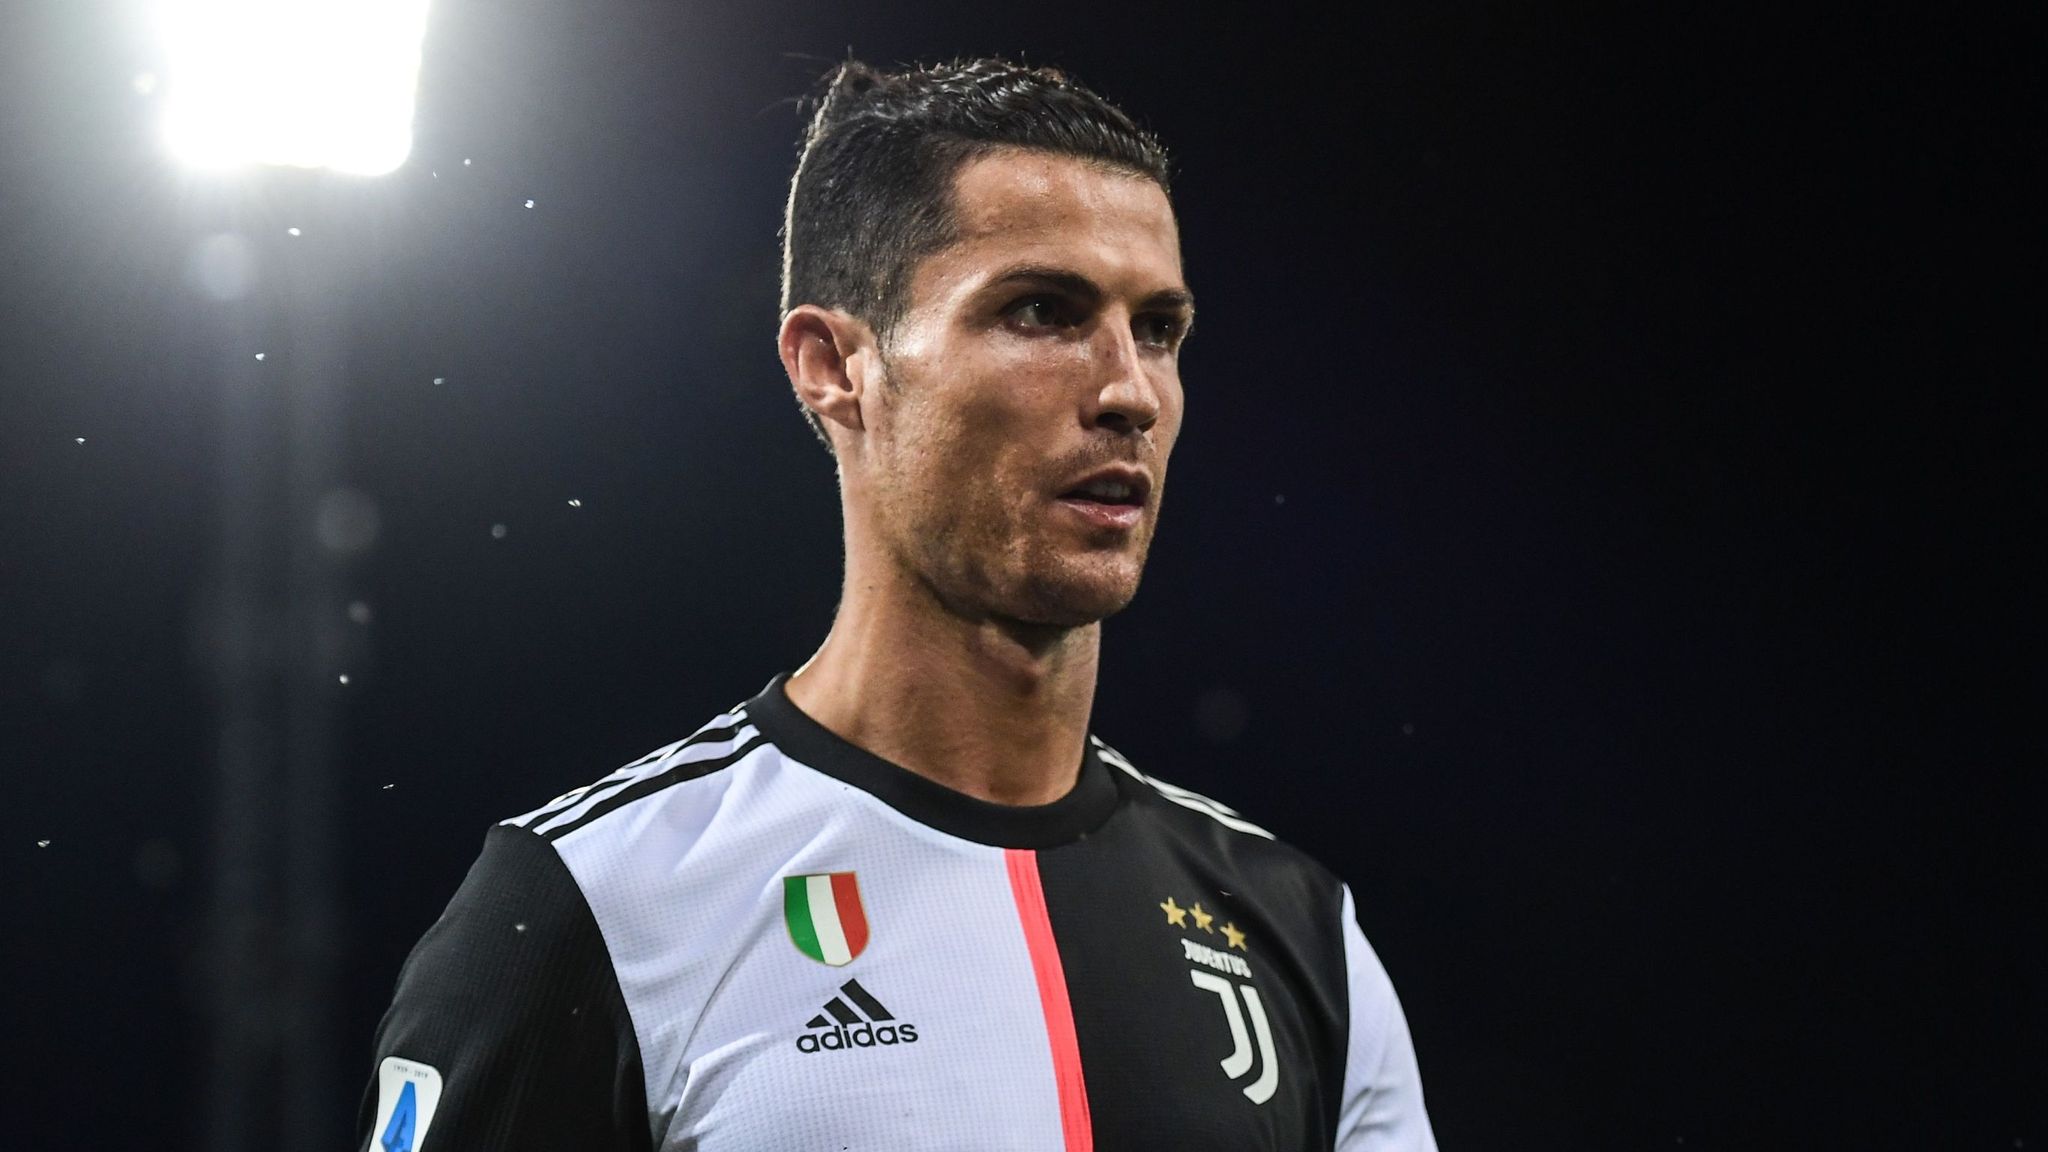 Champions League: Ronaldo Scores A Stunner As Juventus Lose 3-0